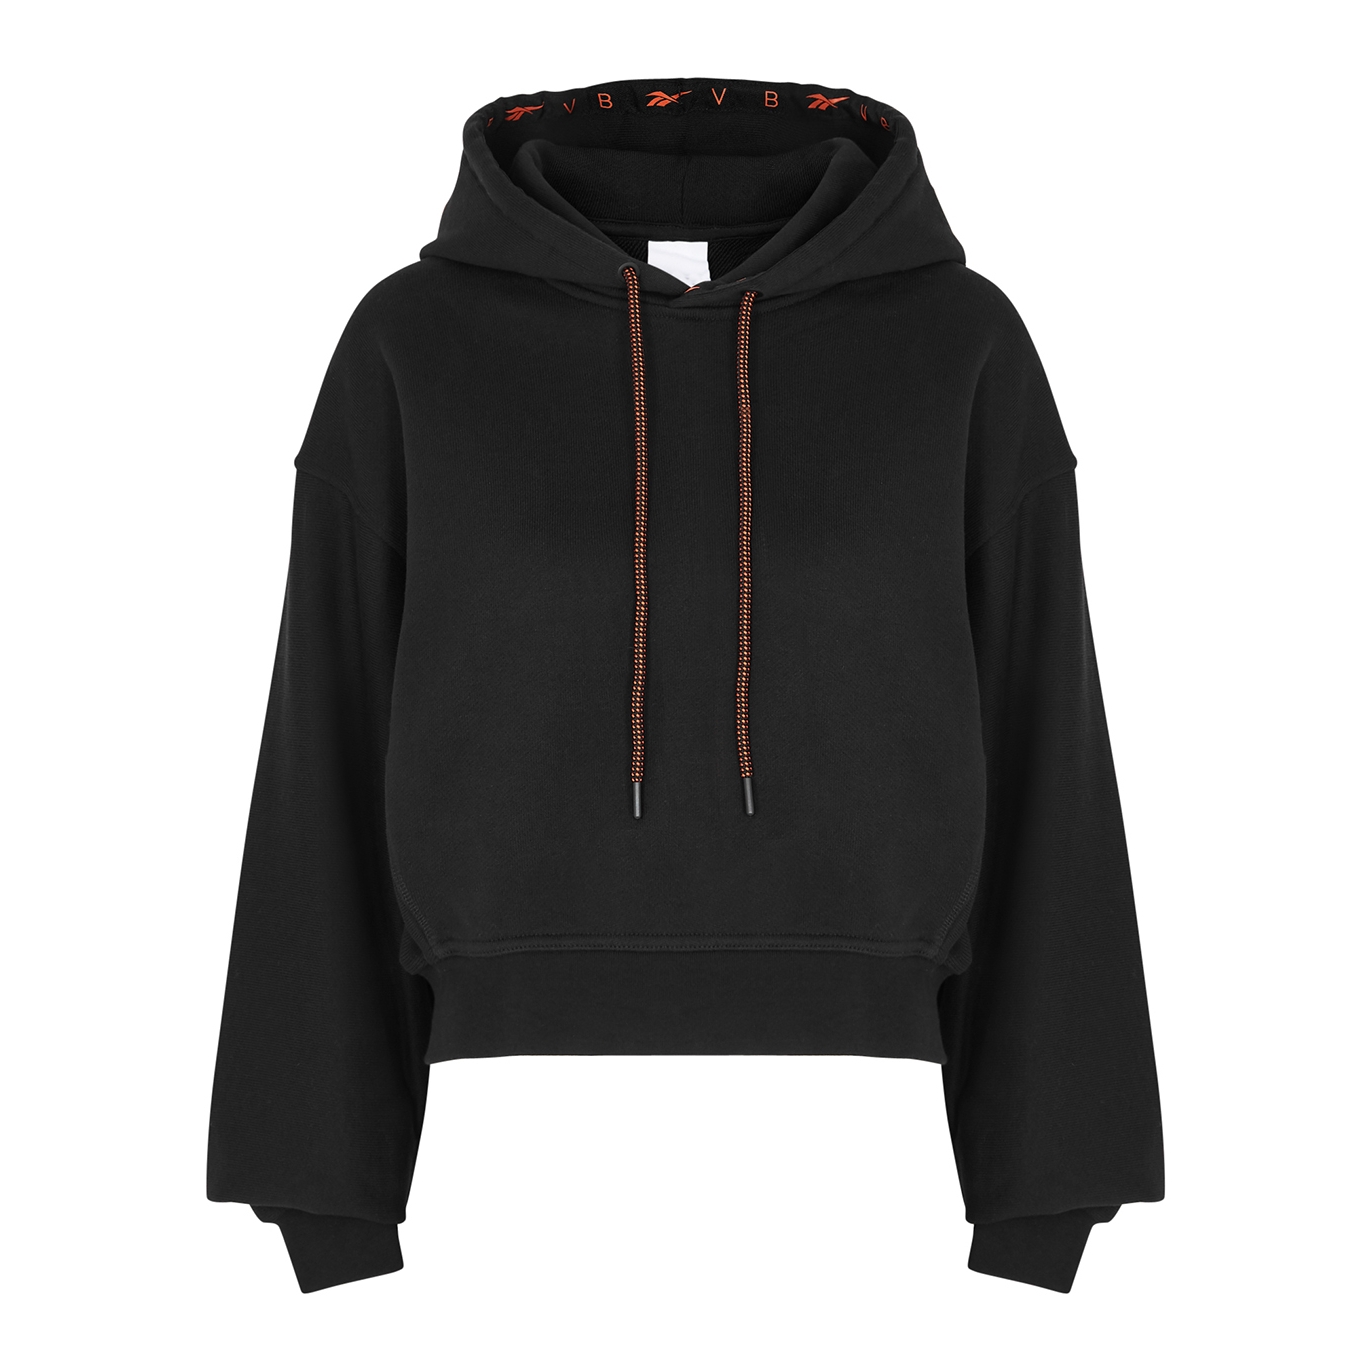 Reebok X Victoria Beckham Logo Hooded Cropped Cotton Sweatshirt - Black - XS